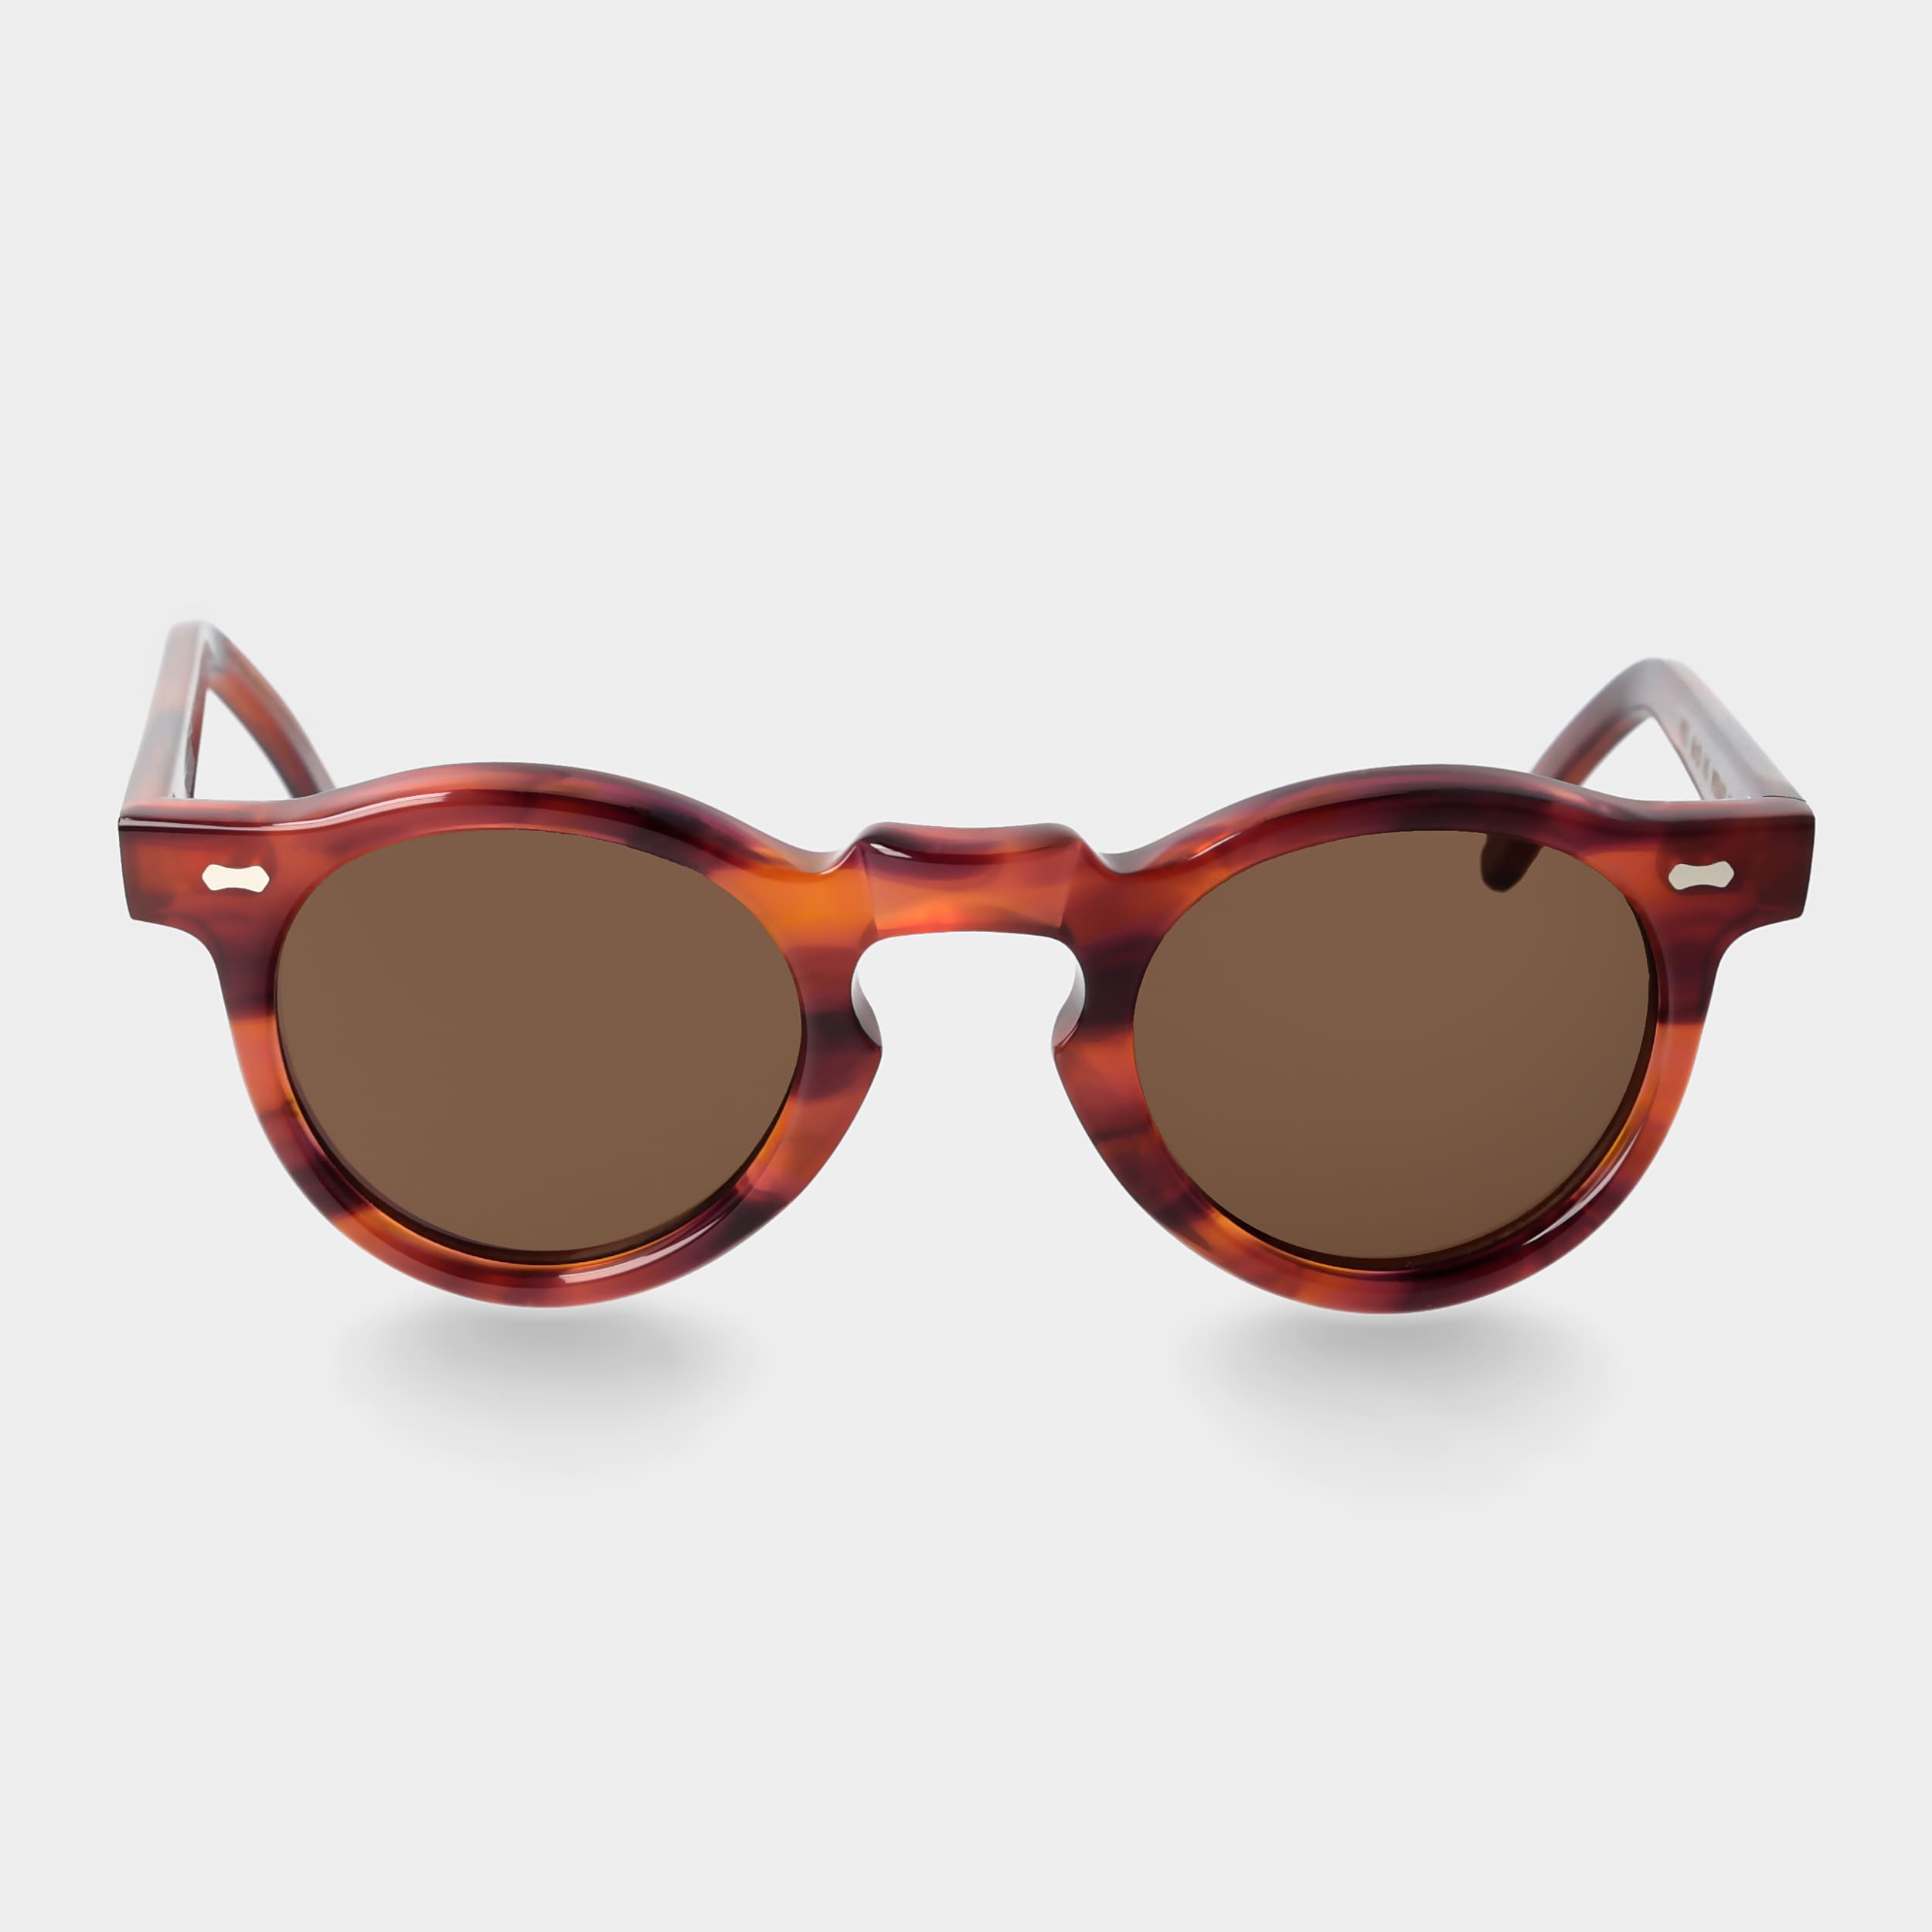 sunglasses-welt-havana-tobacco-tbd-eyewear-front